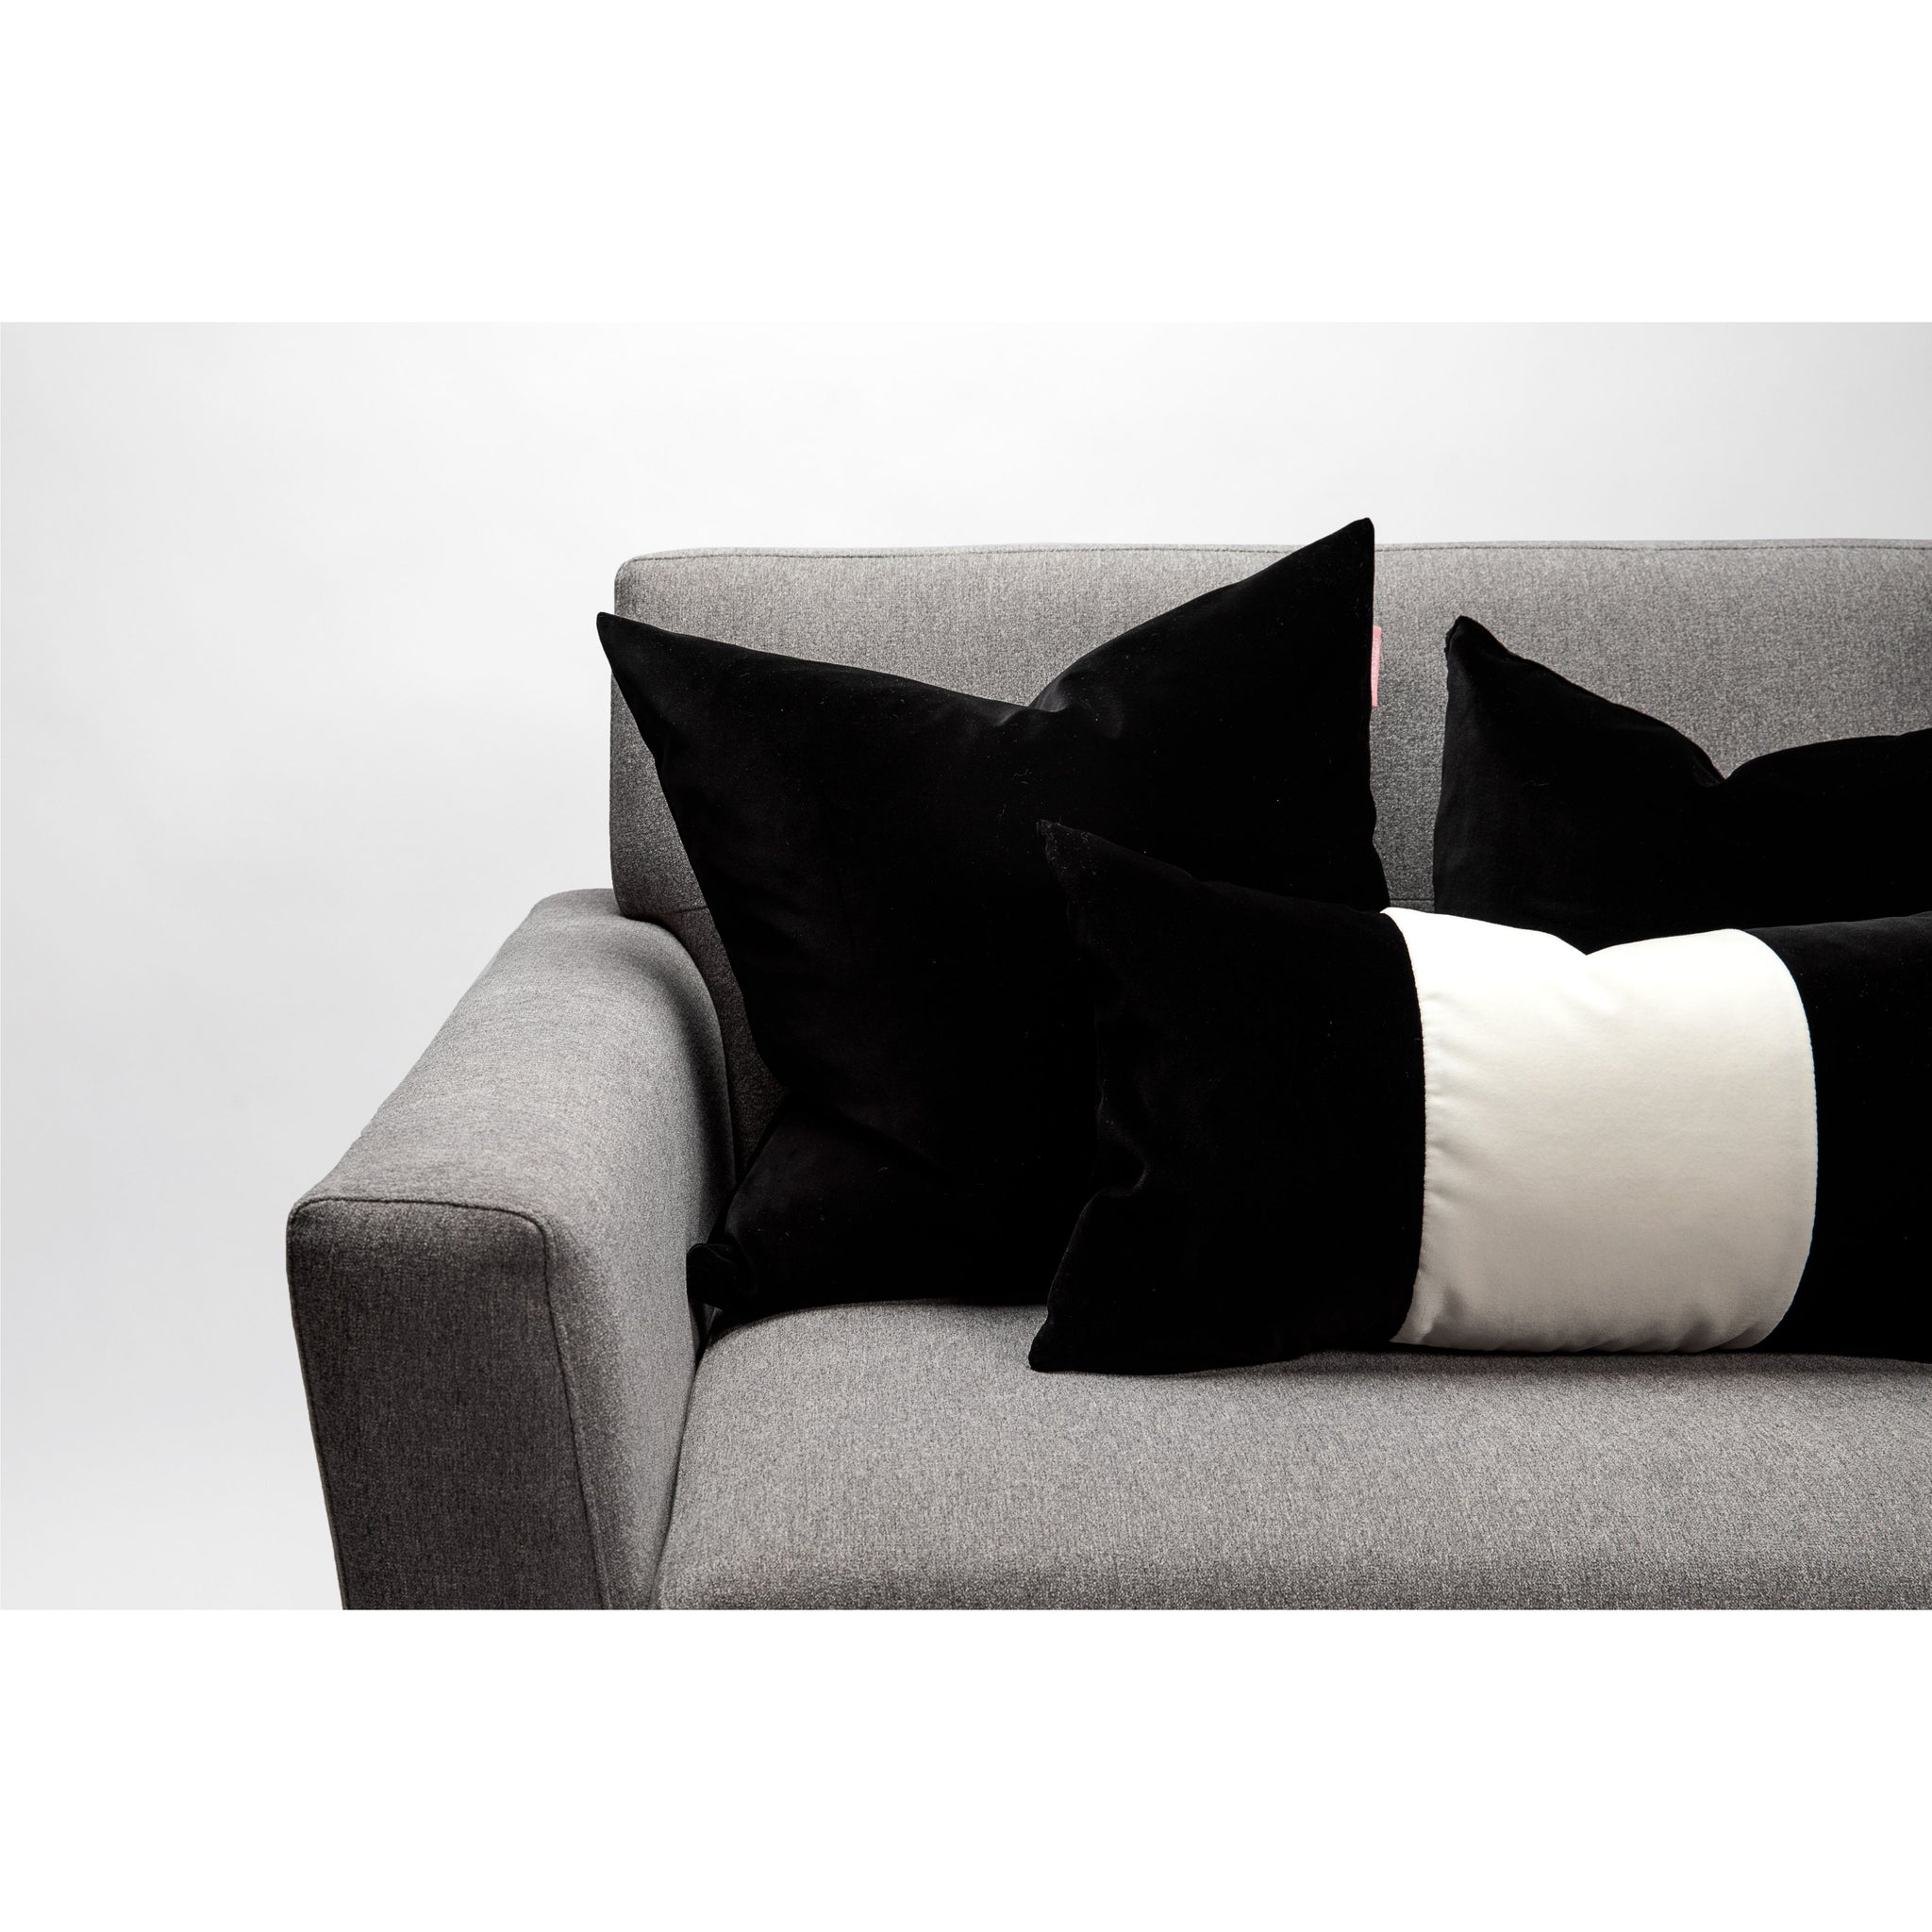 Modern  Contemporary Black Soft Italian Pillow Cover